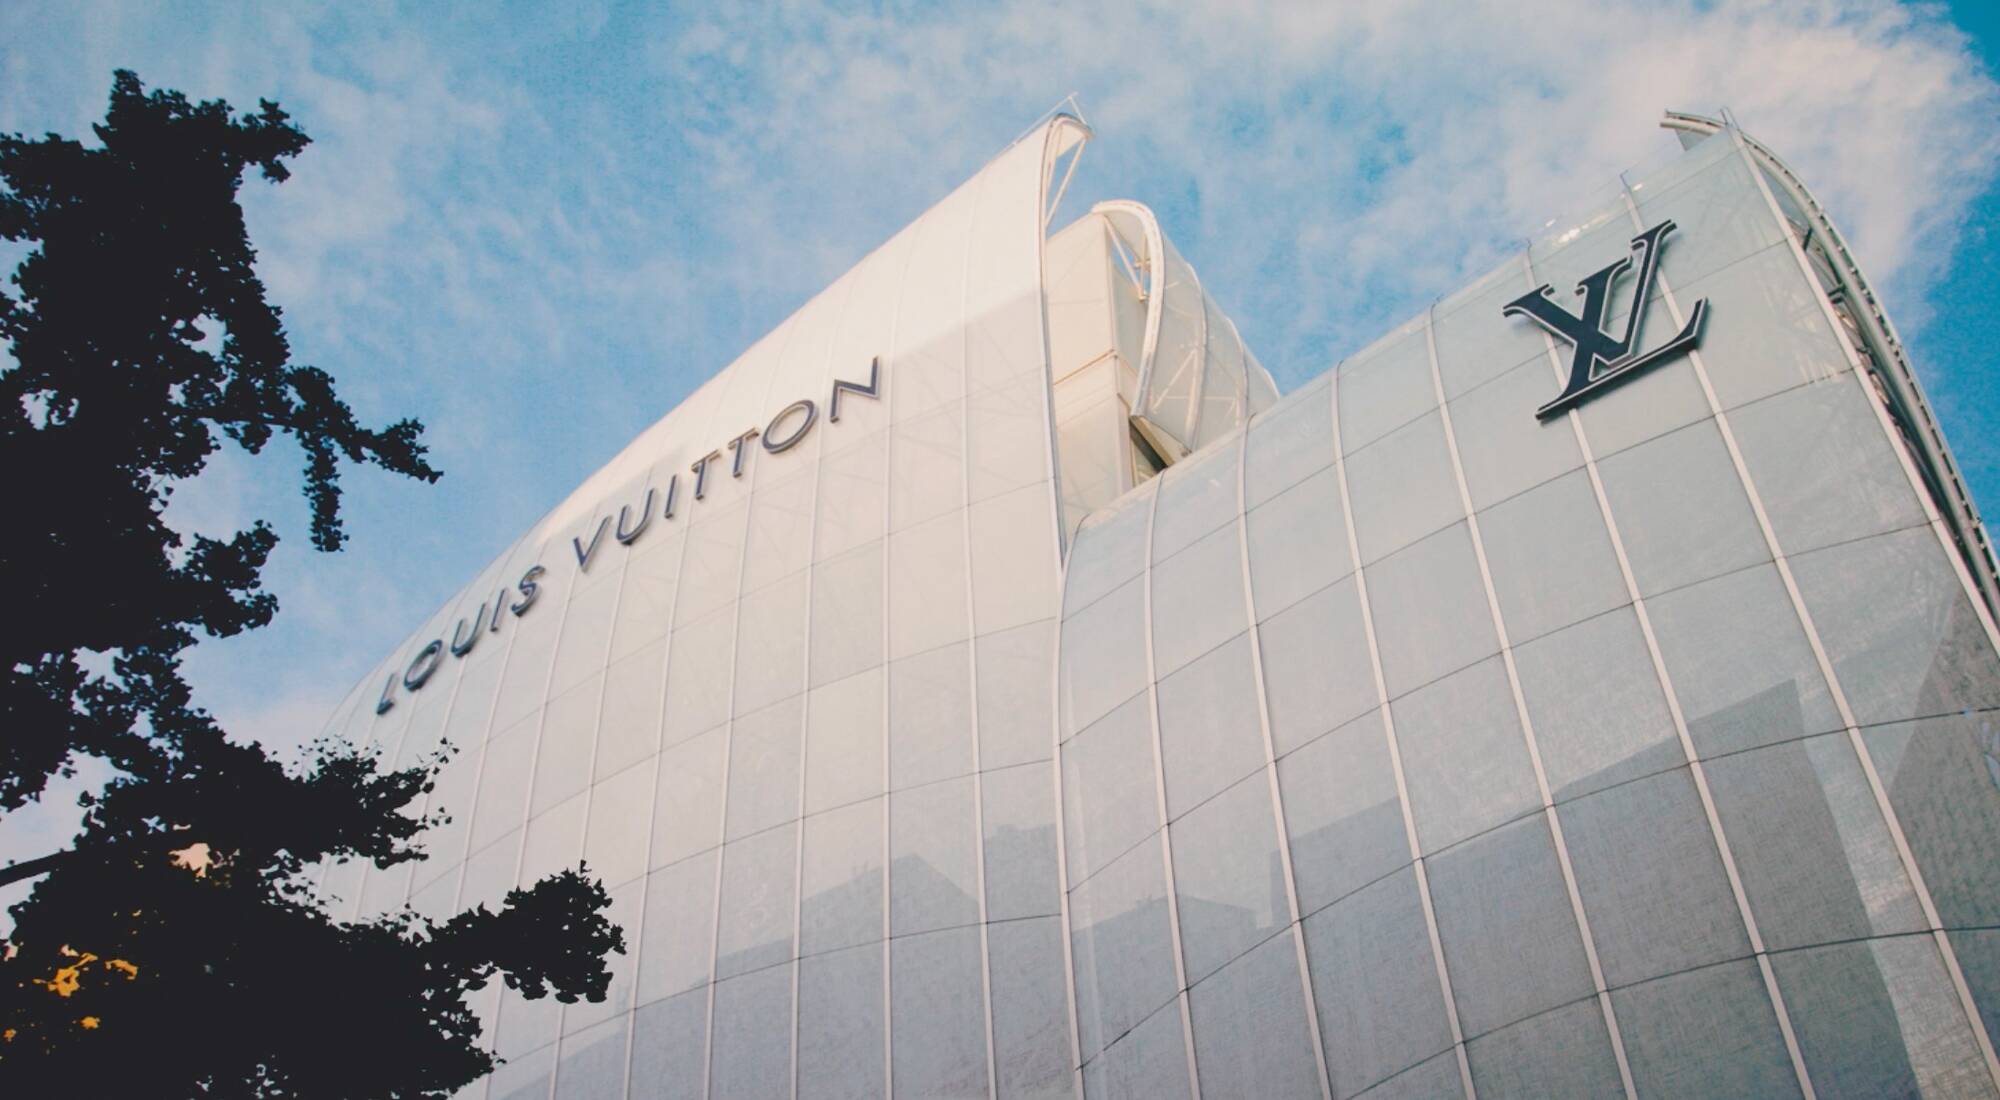 Magasin Louis Vuitton Paris - Maroquinerie (adresse, avis)